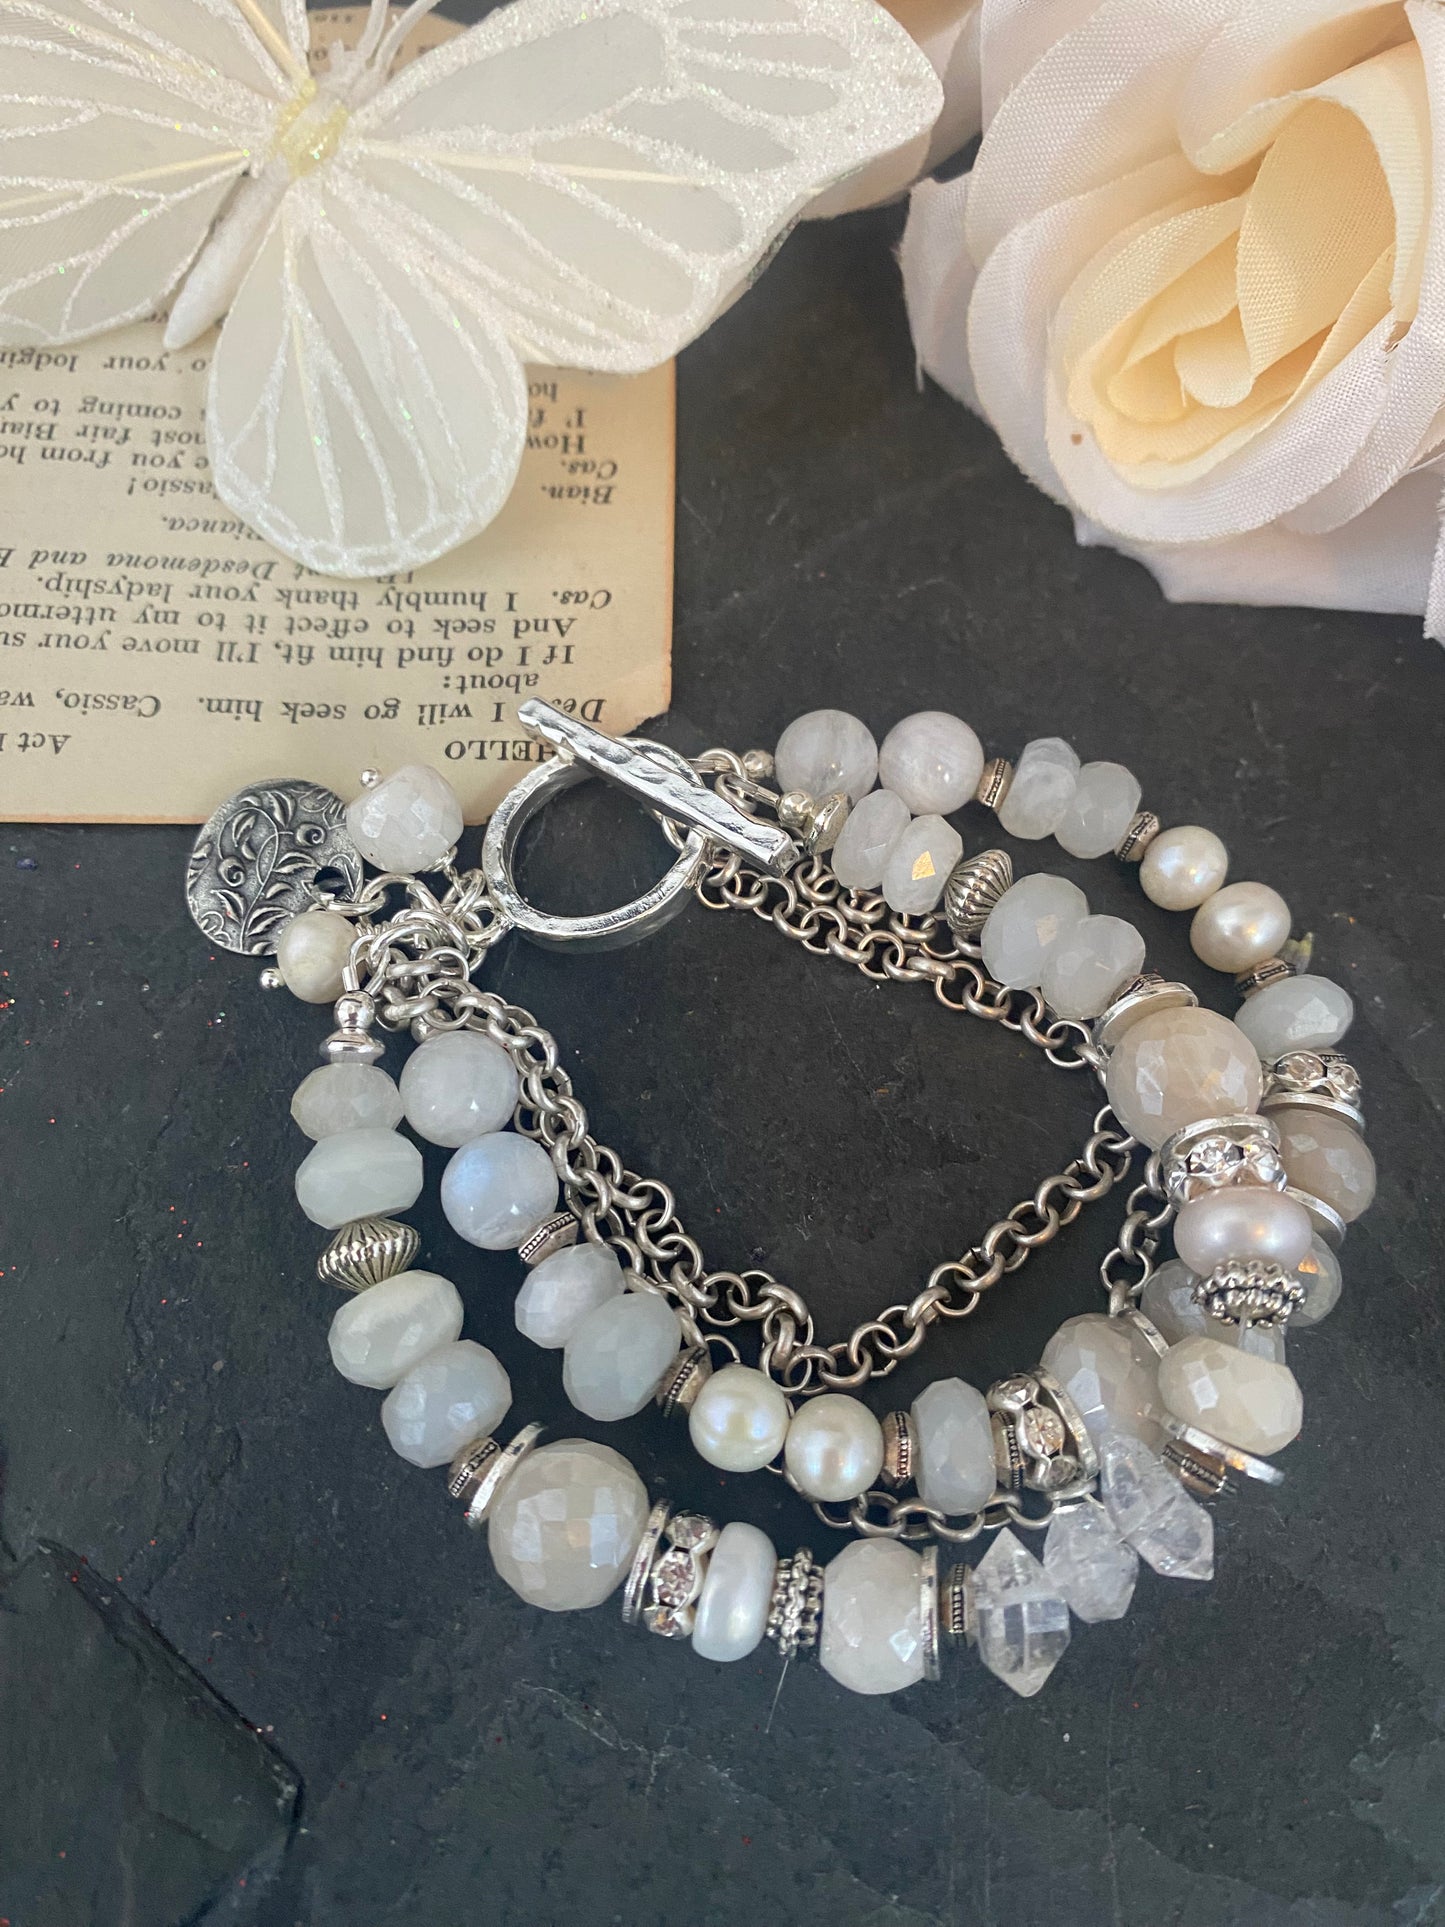 Moonstone, herkimer diamonds, pearls, silver bracelet, jewelry